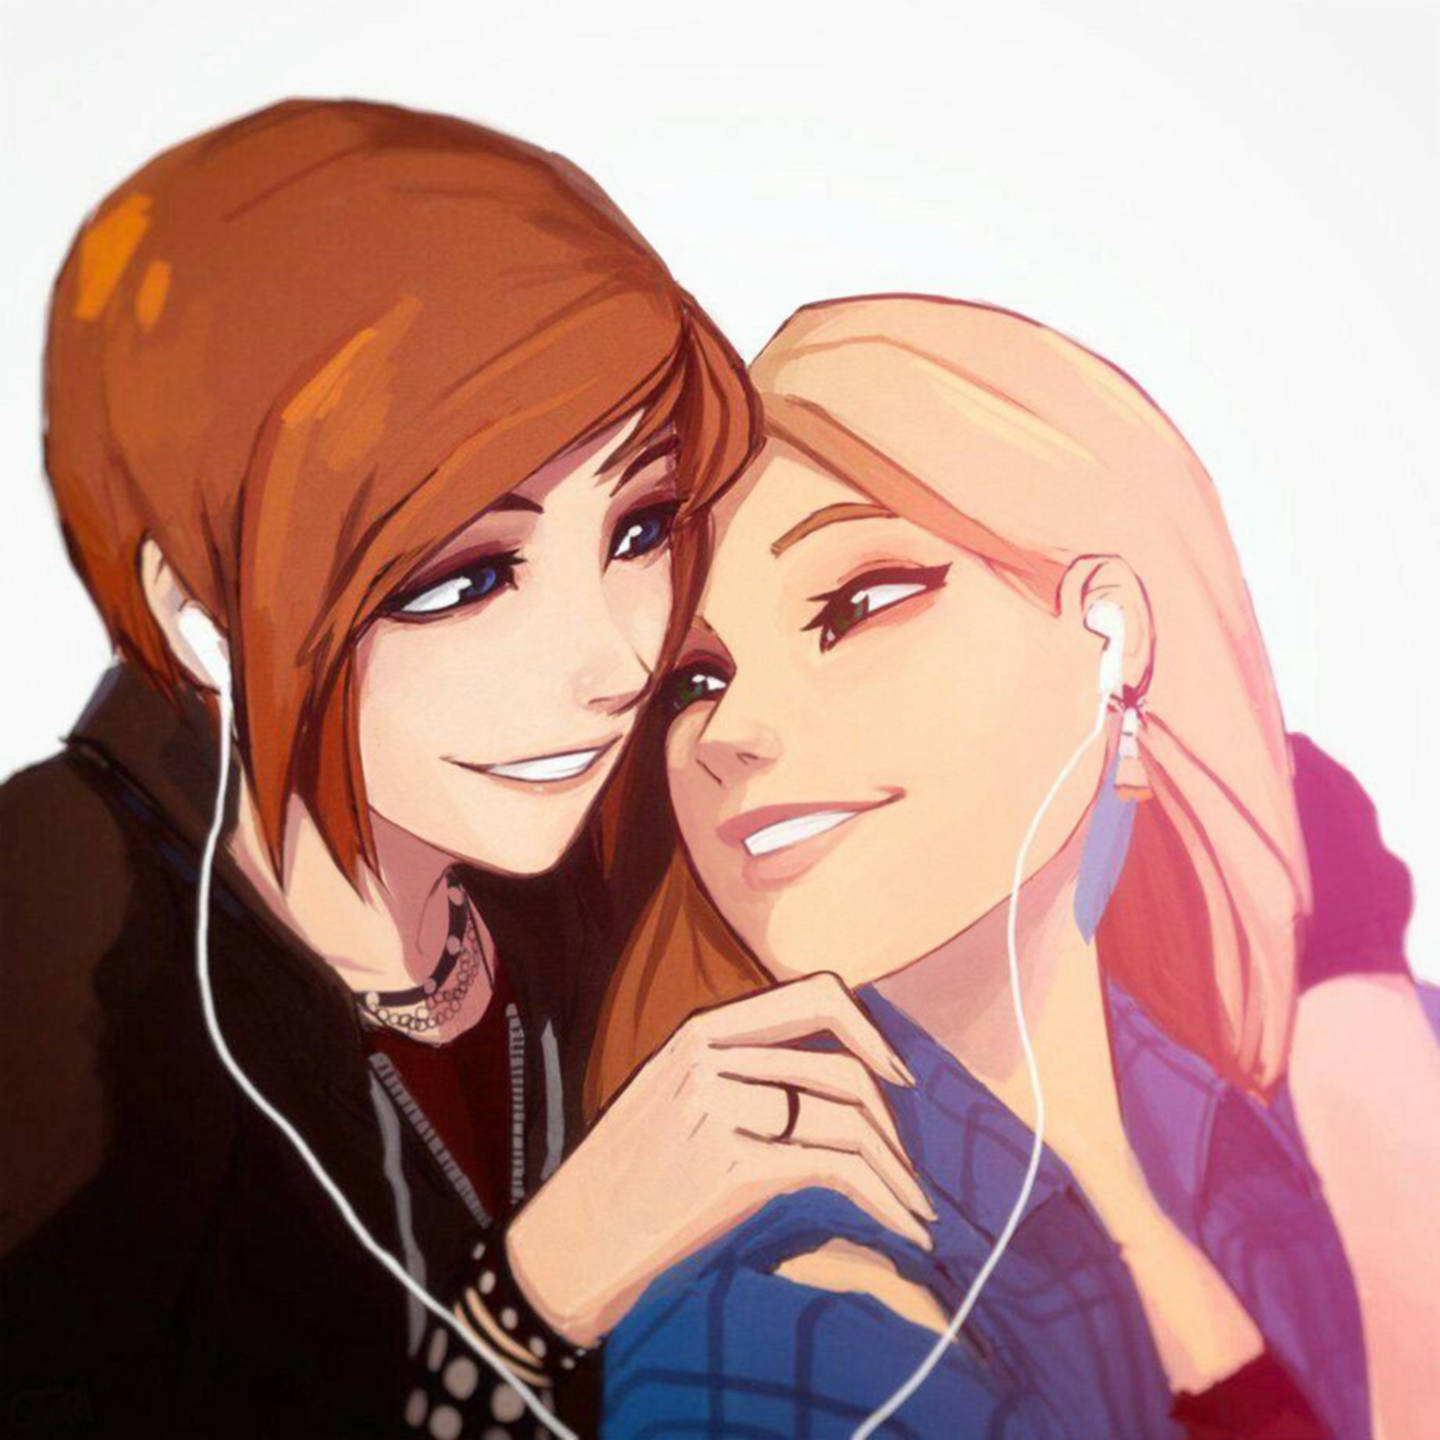 Anime Lesbians Chloe And Rachel Wallpaper